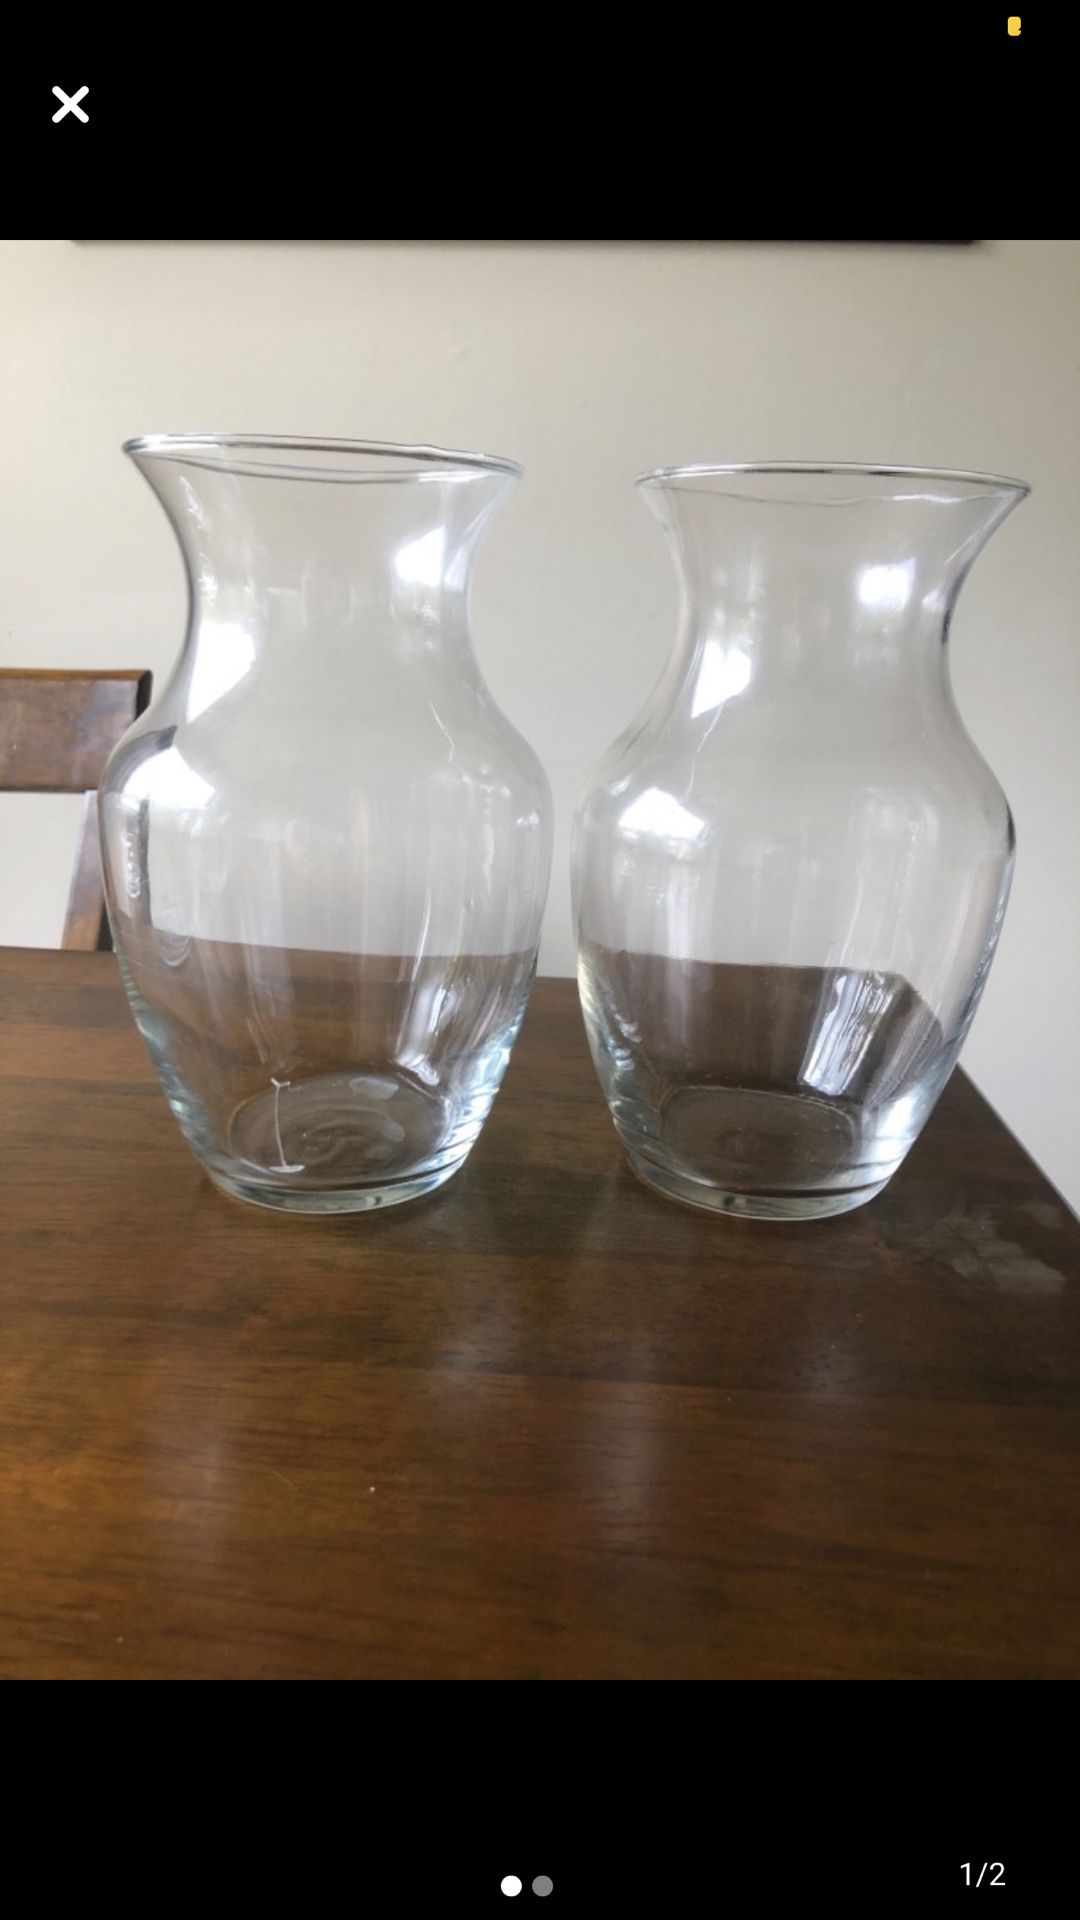 4 glass vases